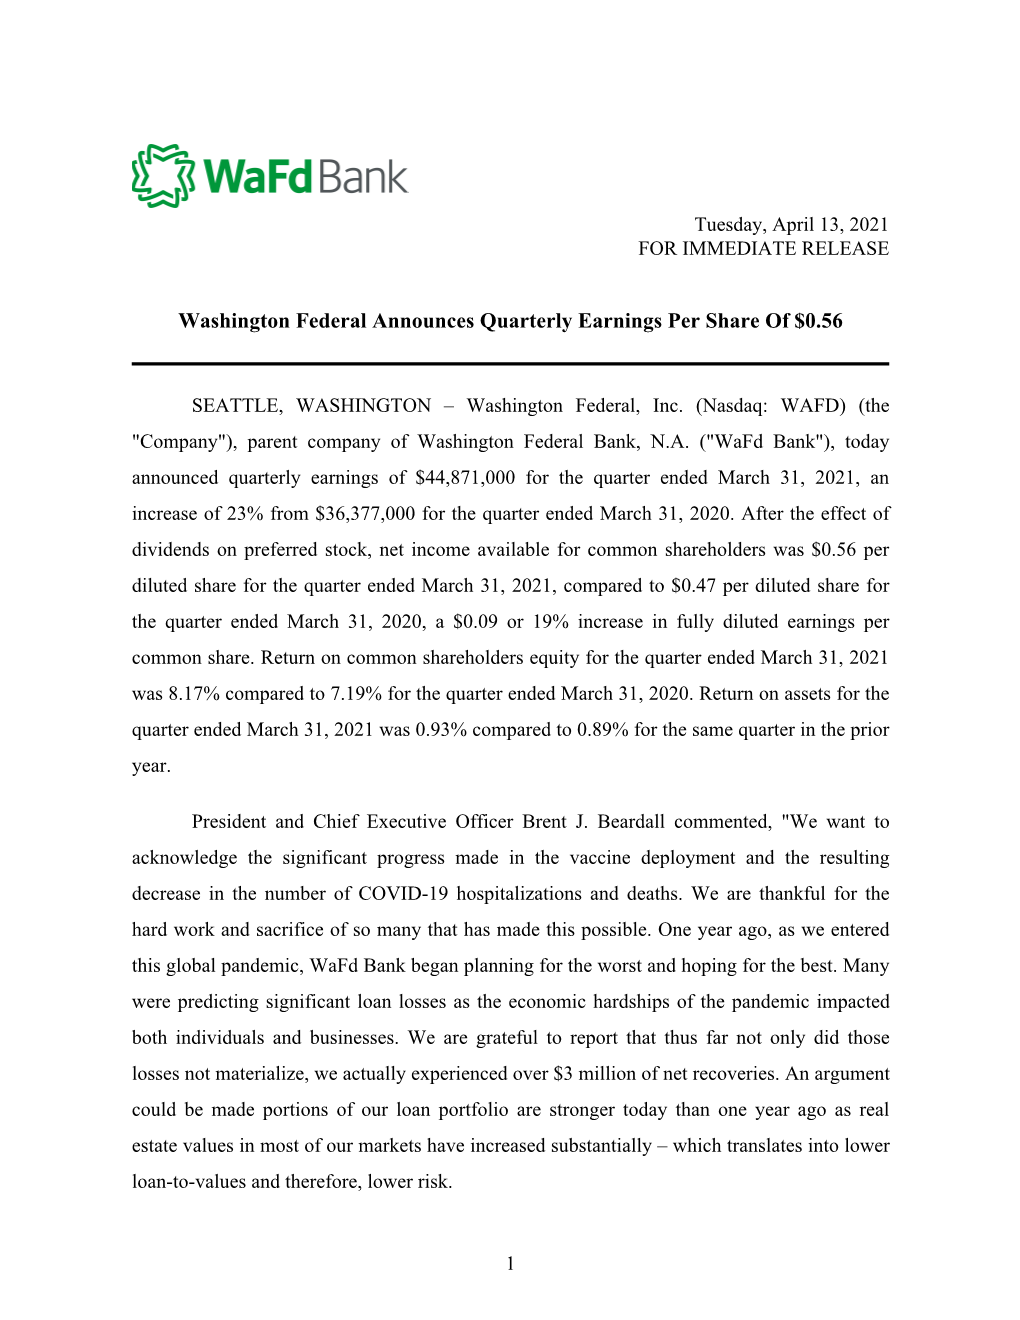 Washington Federal Announces Quarterly Earnings Per Share of $0.56